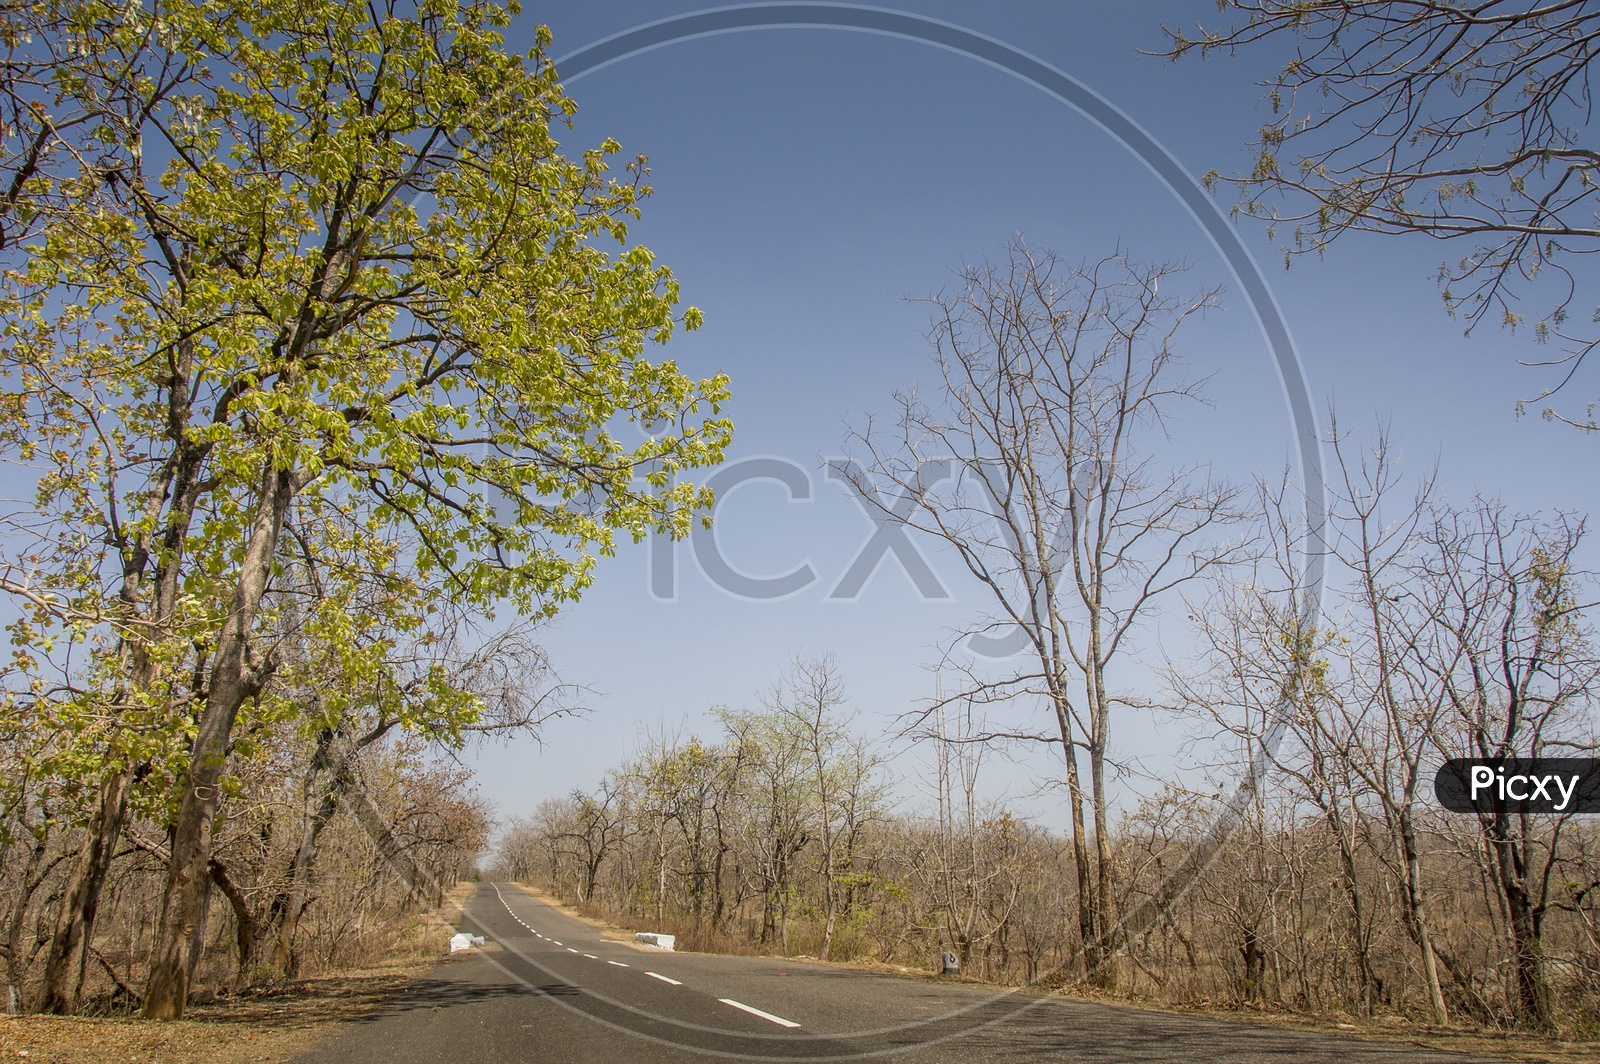 Main roads of Pocharam